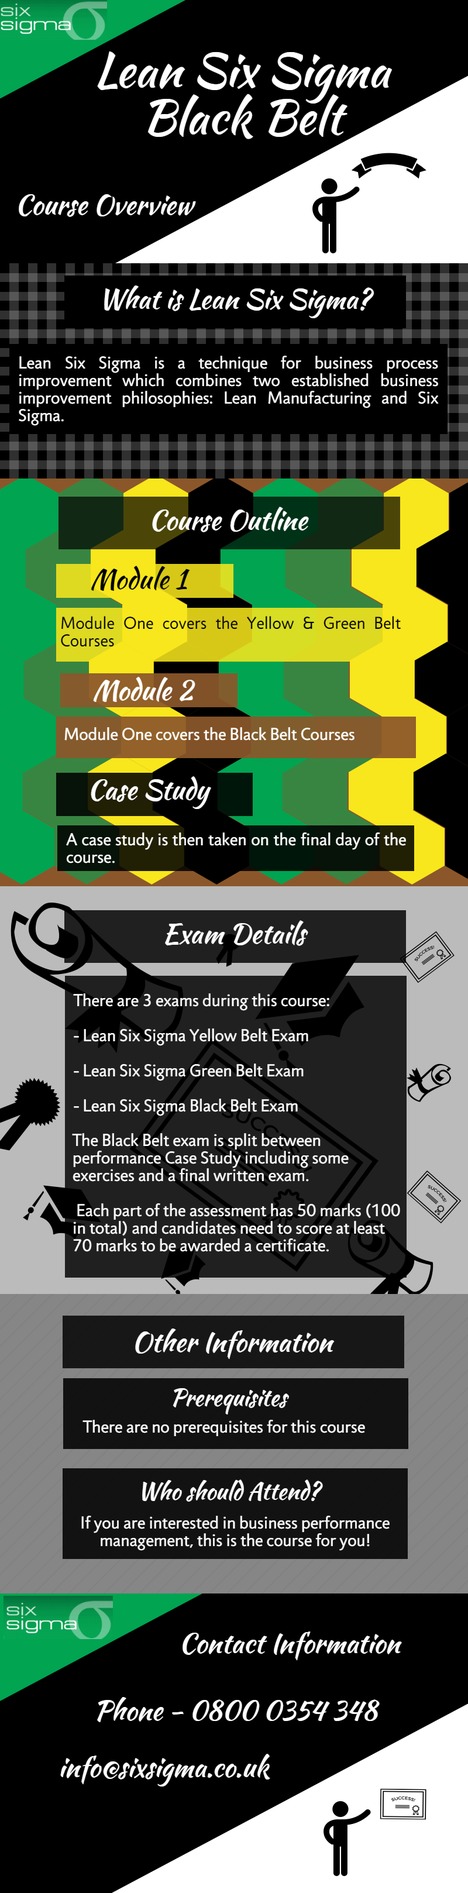 Six Sigma Black Belt Course Information